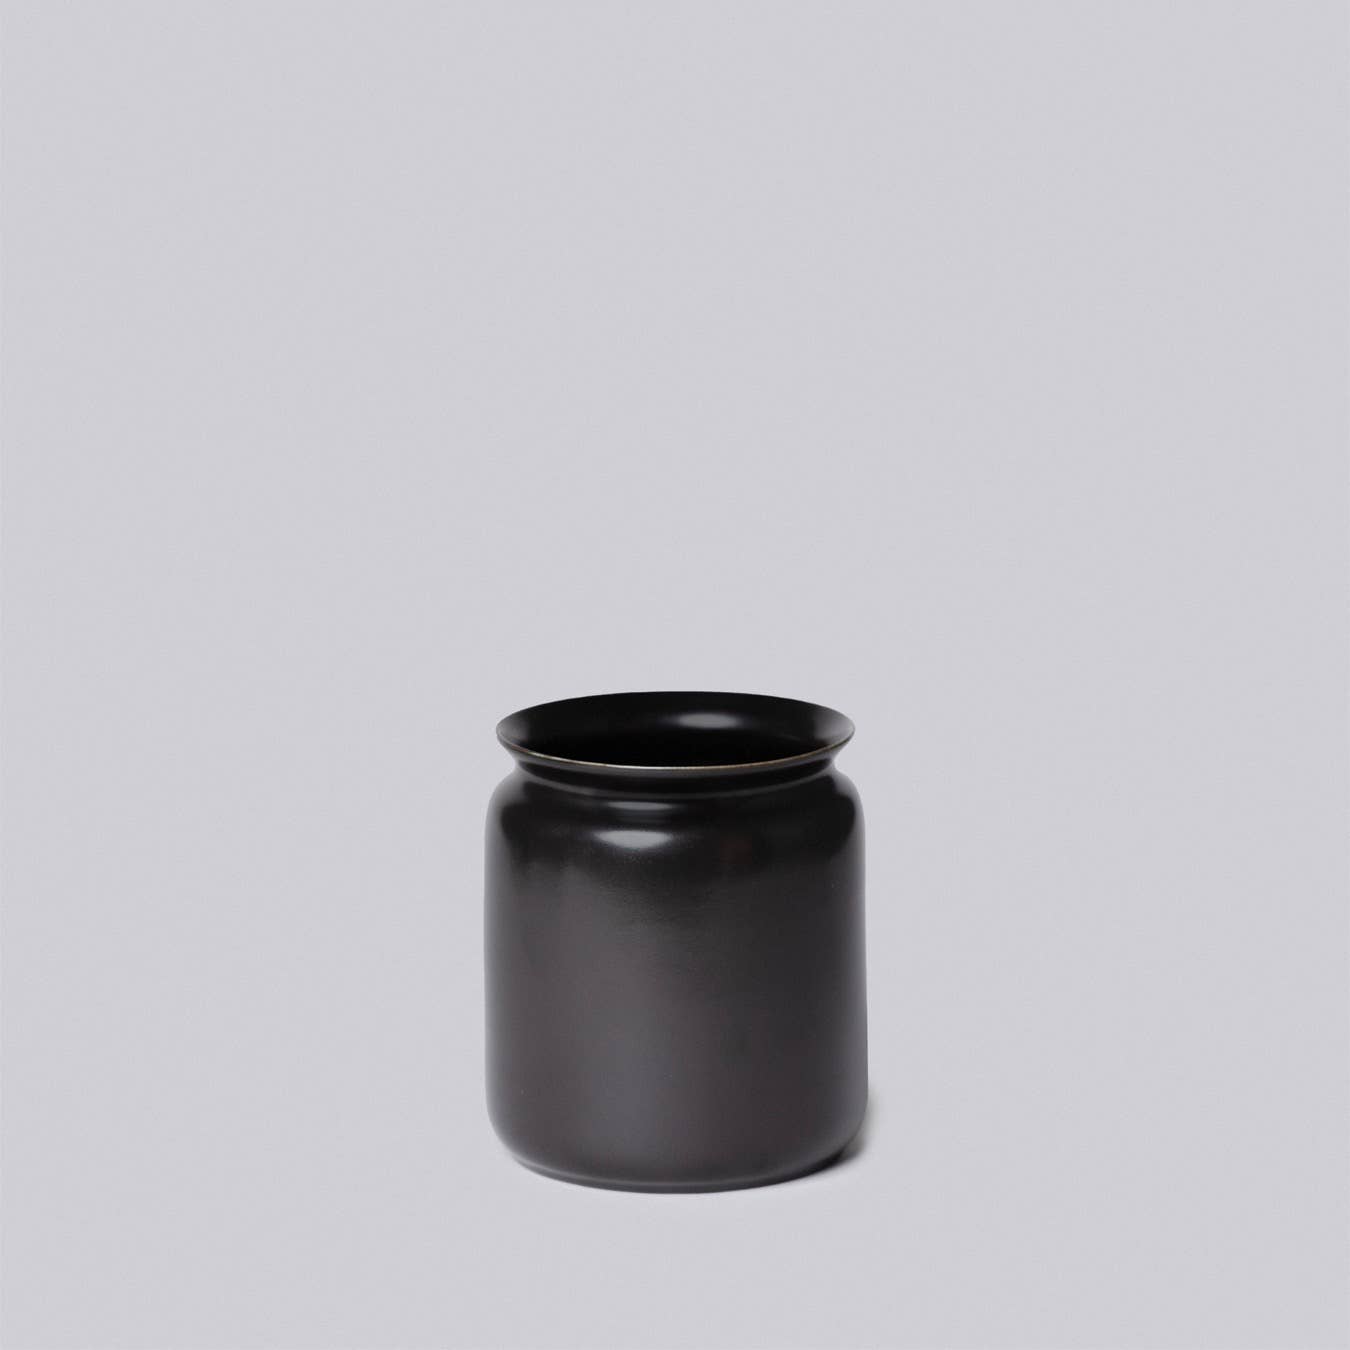 Middle Kingdom - Small Semi-Matte Black Porcelain Vases